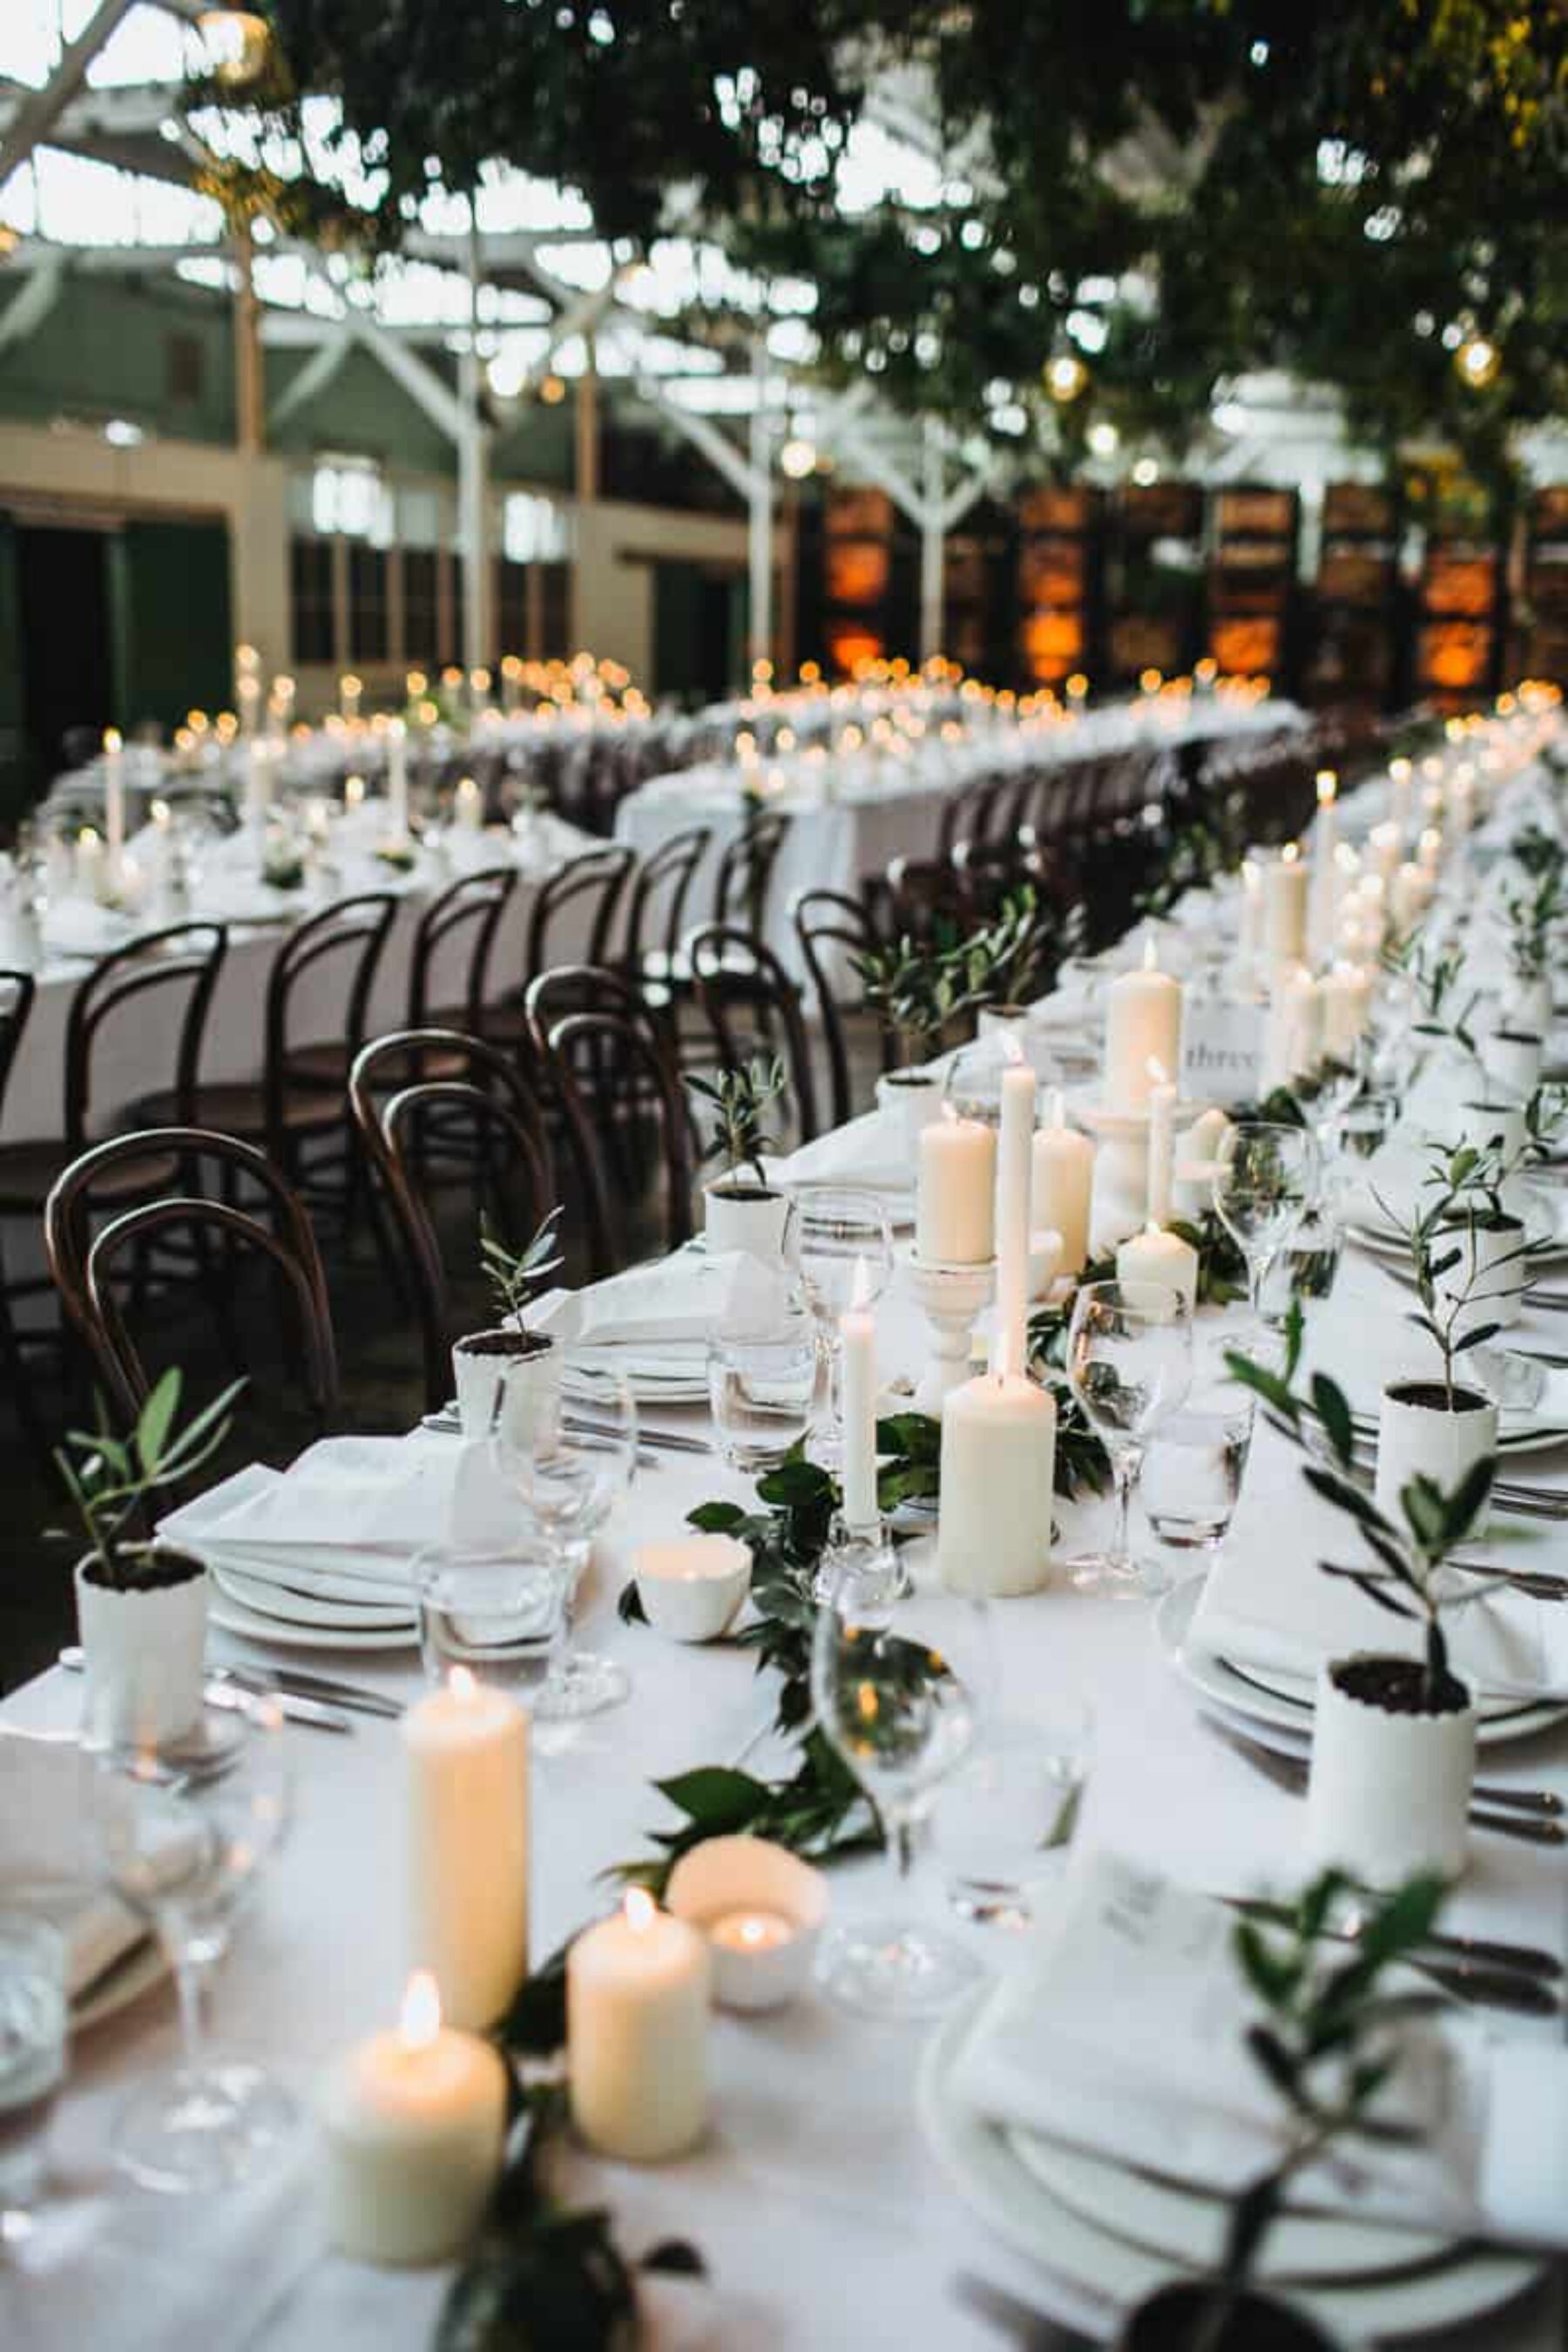 modern warehouse wedding with hanging greenery